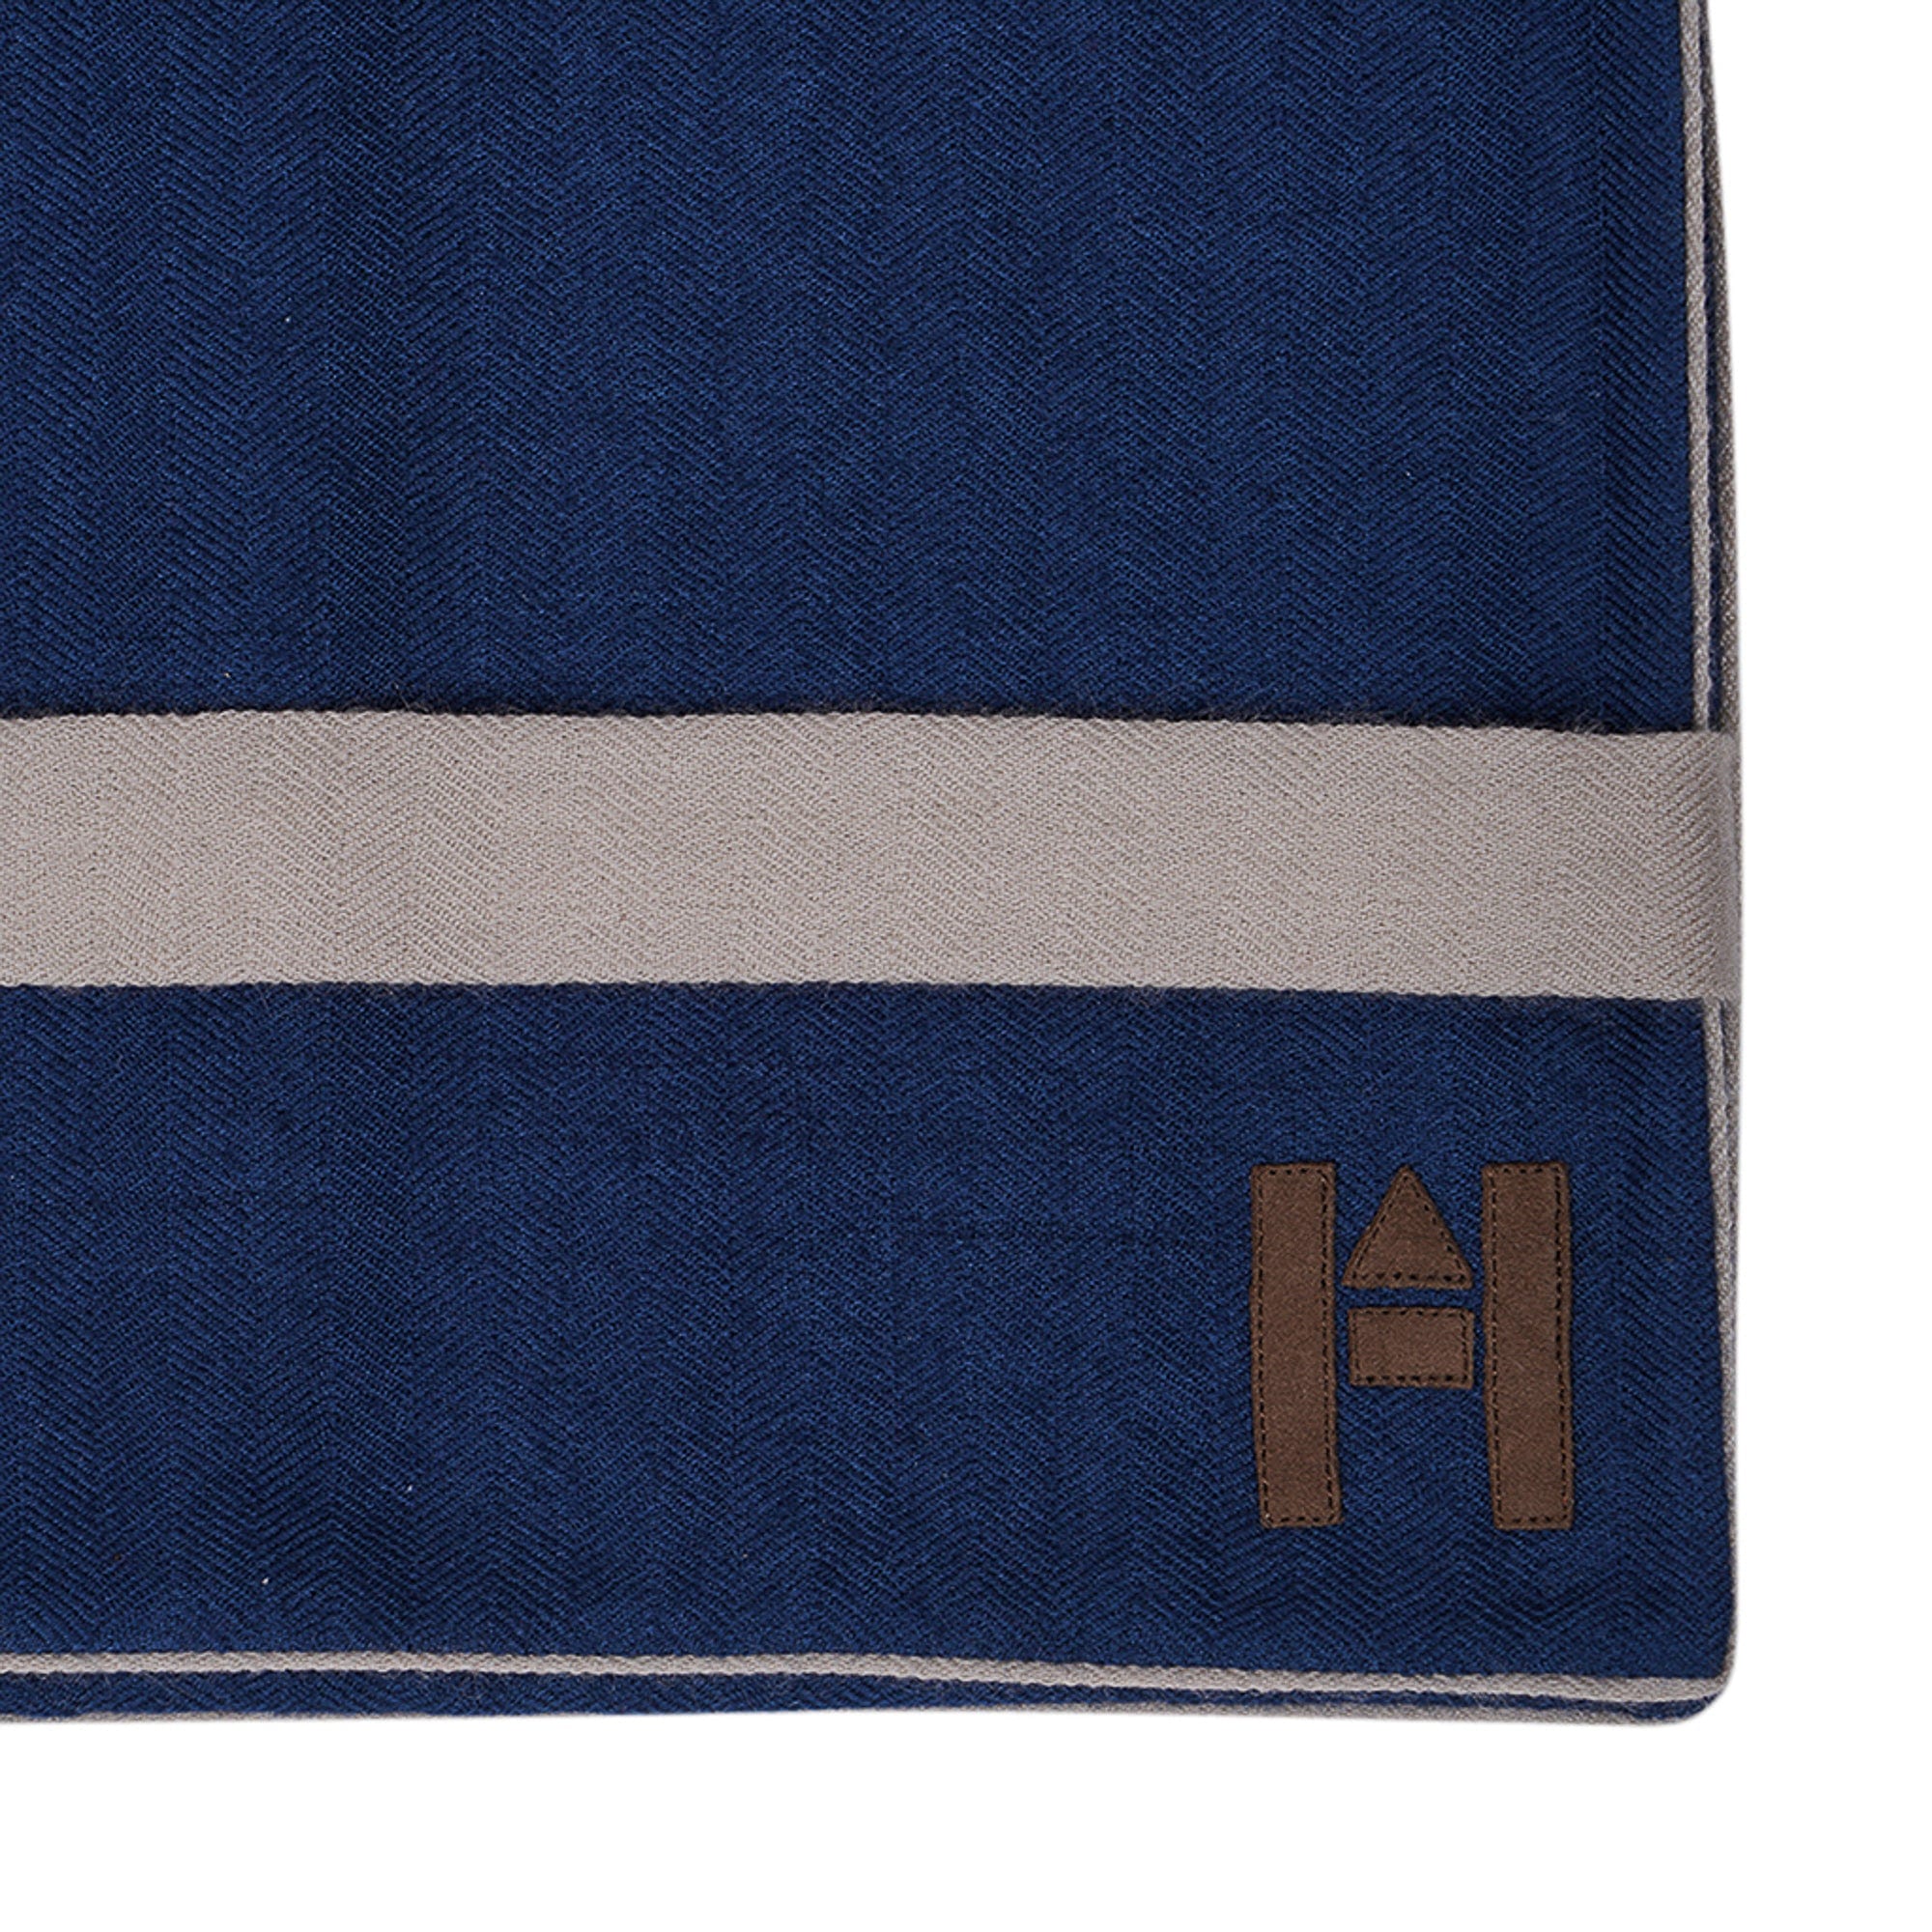 Hermes Traveler with Case Blanket Blue / Cream Cashmere